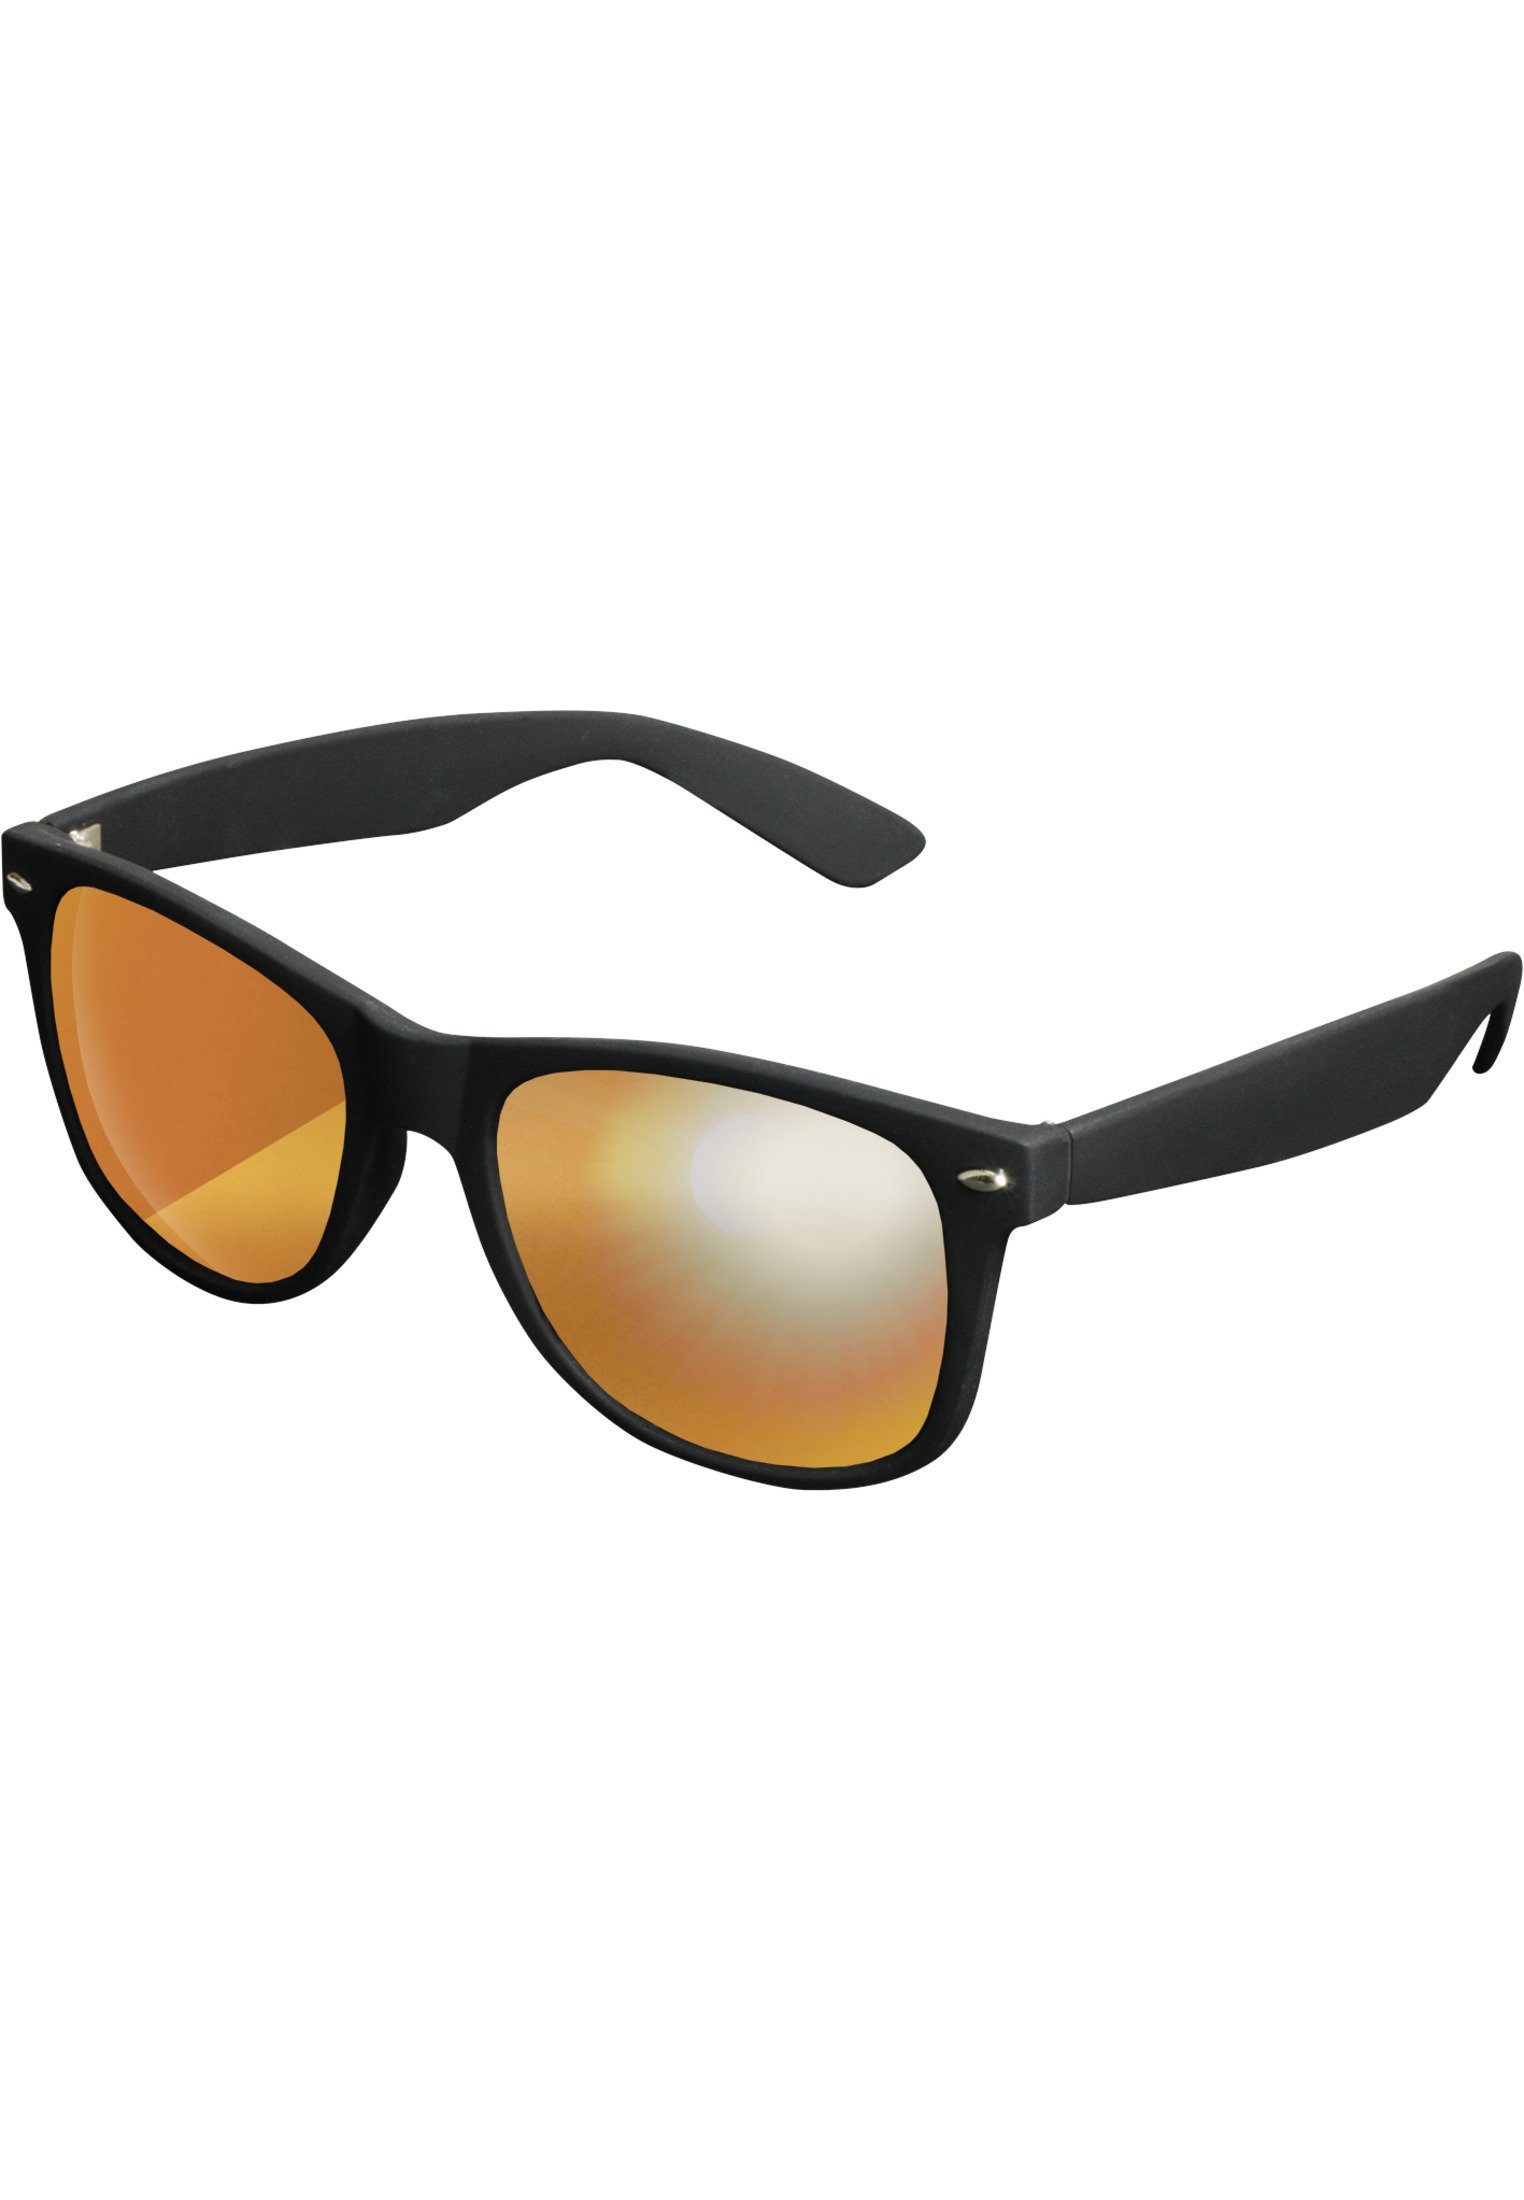 MSTRDS Sonnenbrille Accessoires Sunglasses Likoma blk/orange Mirror